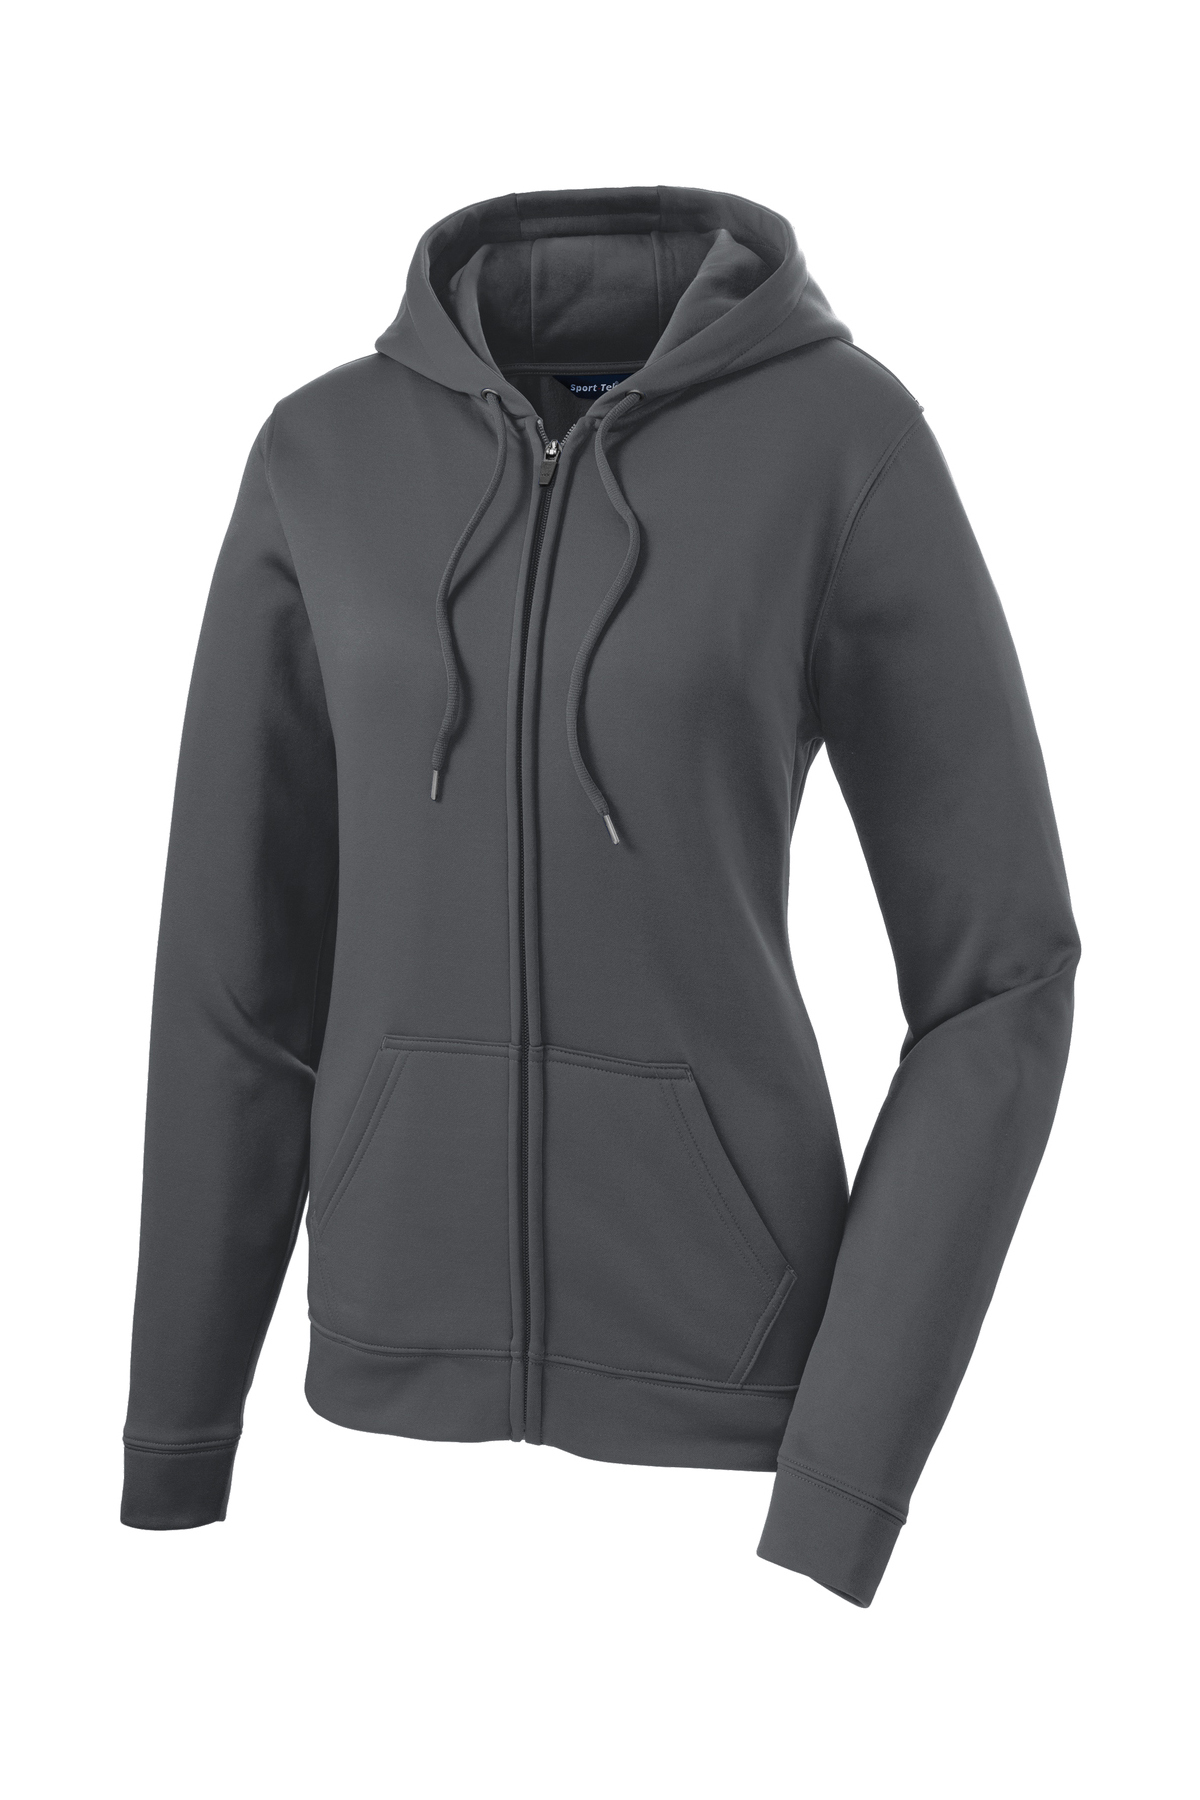 Sport-Tek Ladies Sport-Wick Fleece Full-Zip Hooded Jacket | Product ...